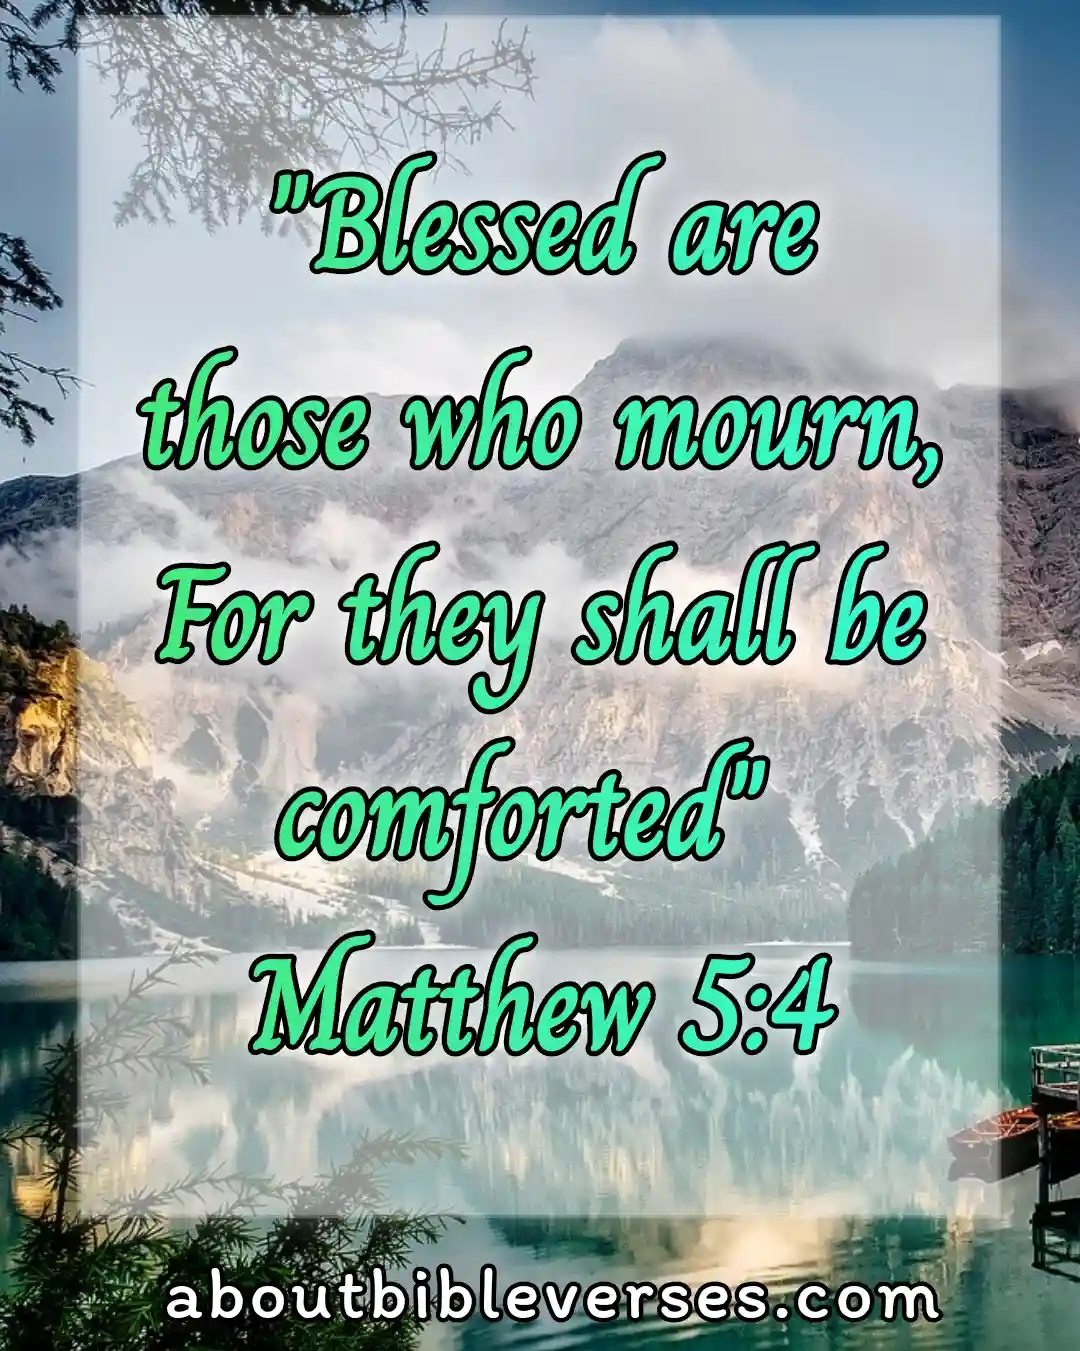 God Blessed Us (Matthew 5:4)